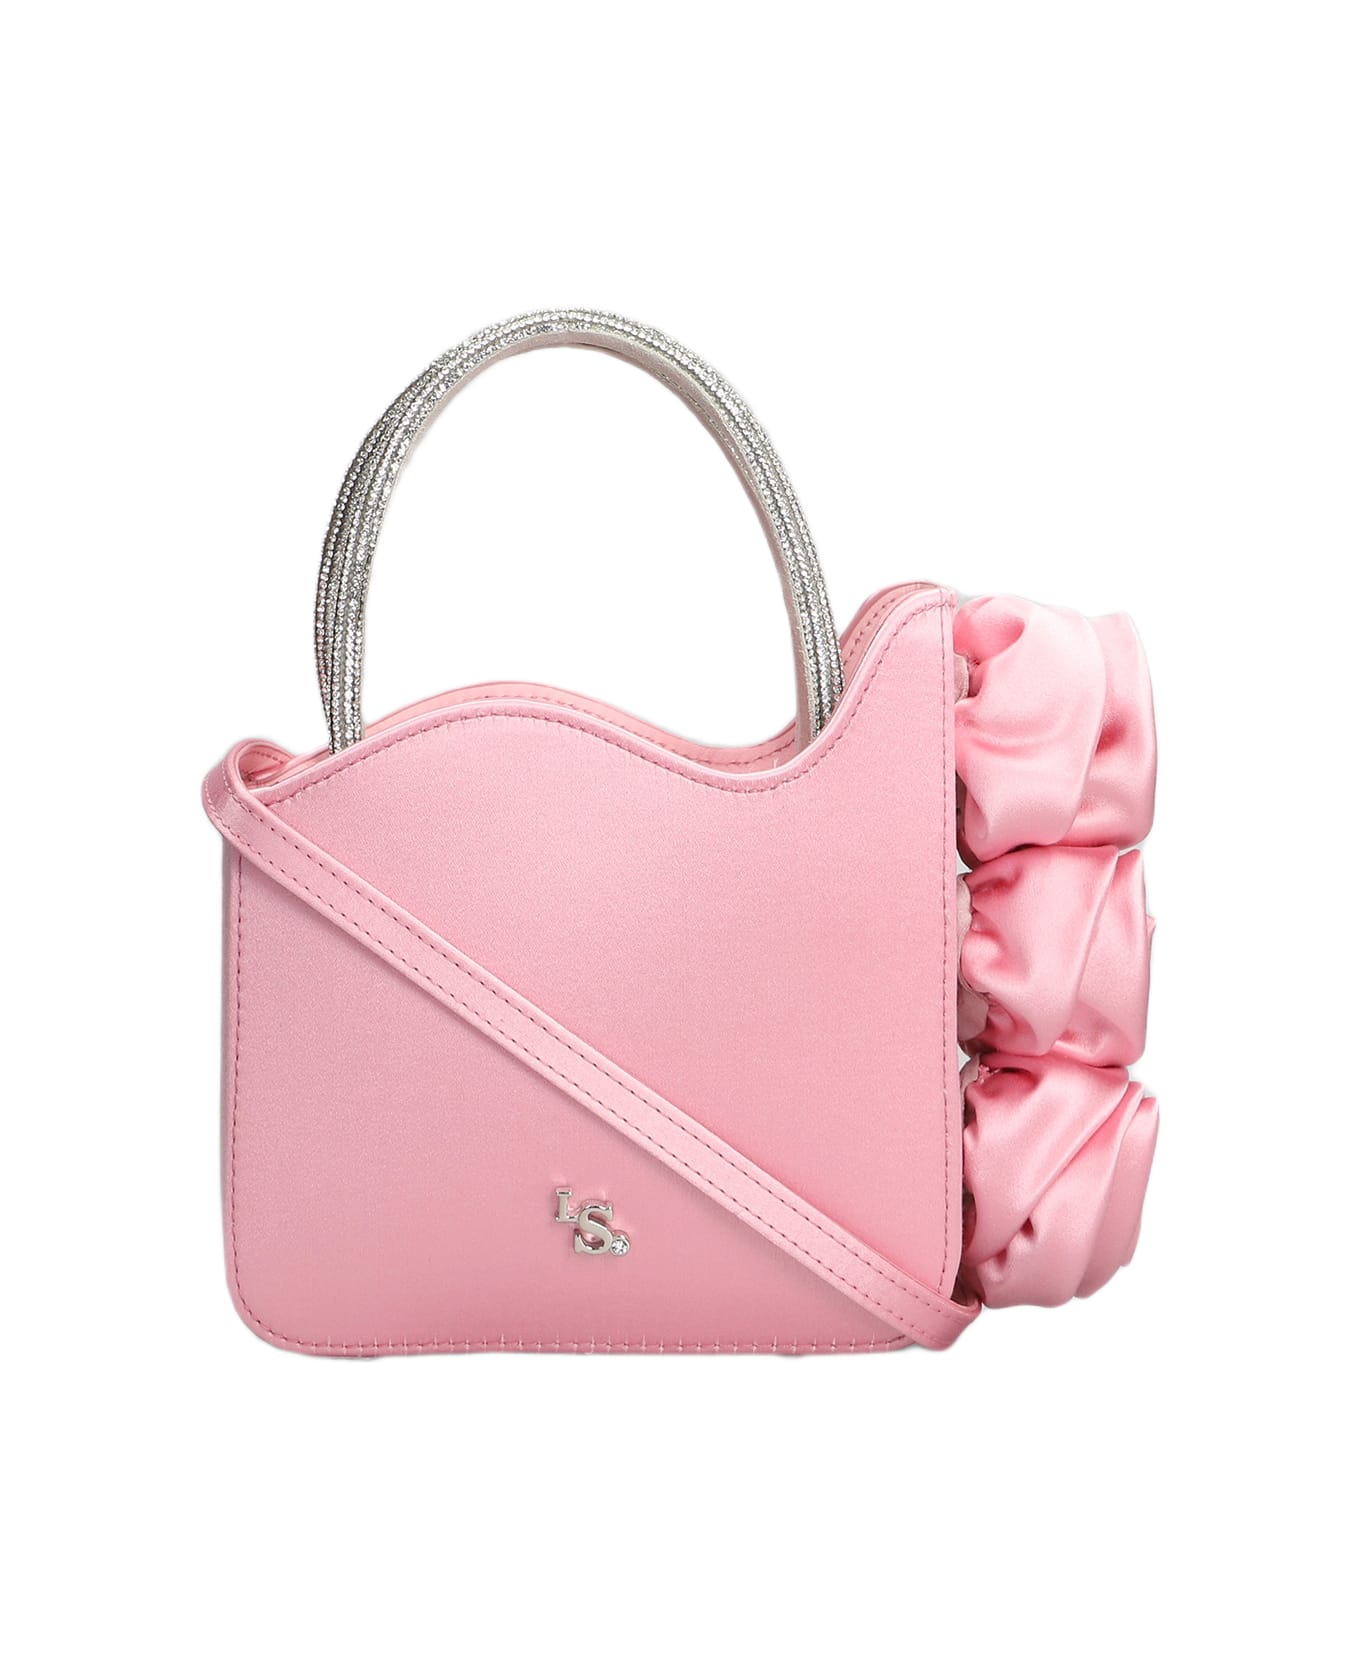 Le Silla Rose Hand Bag In Rose-pink Satin - rose-pink